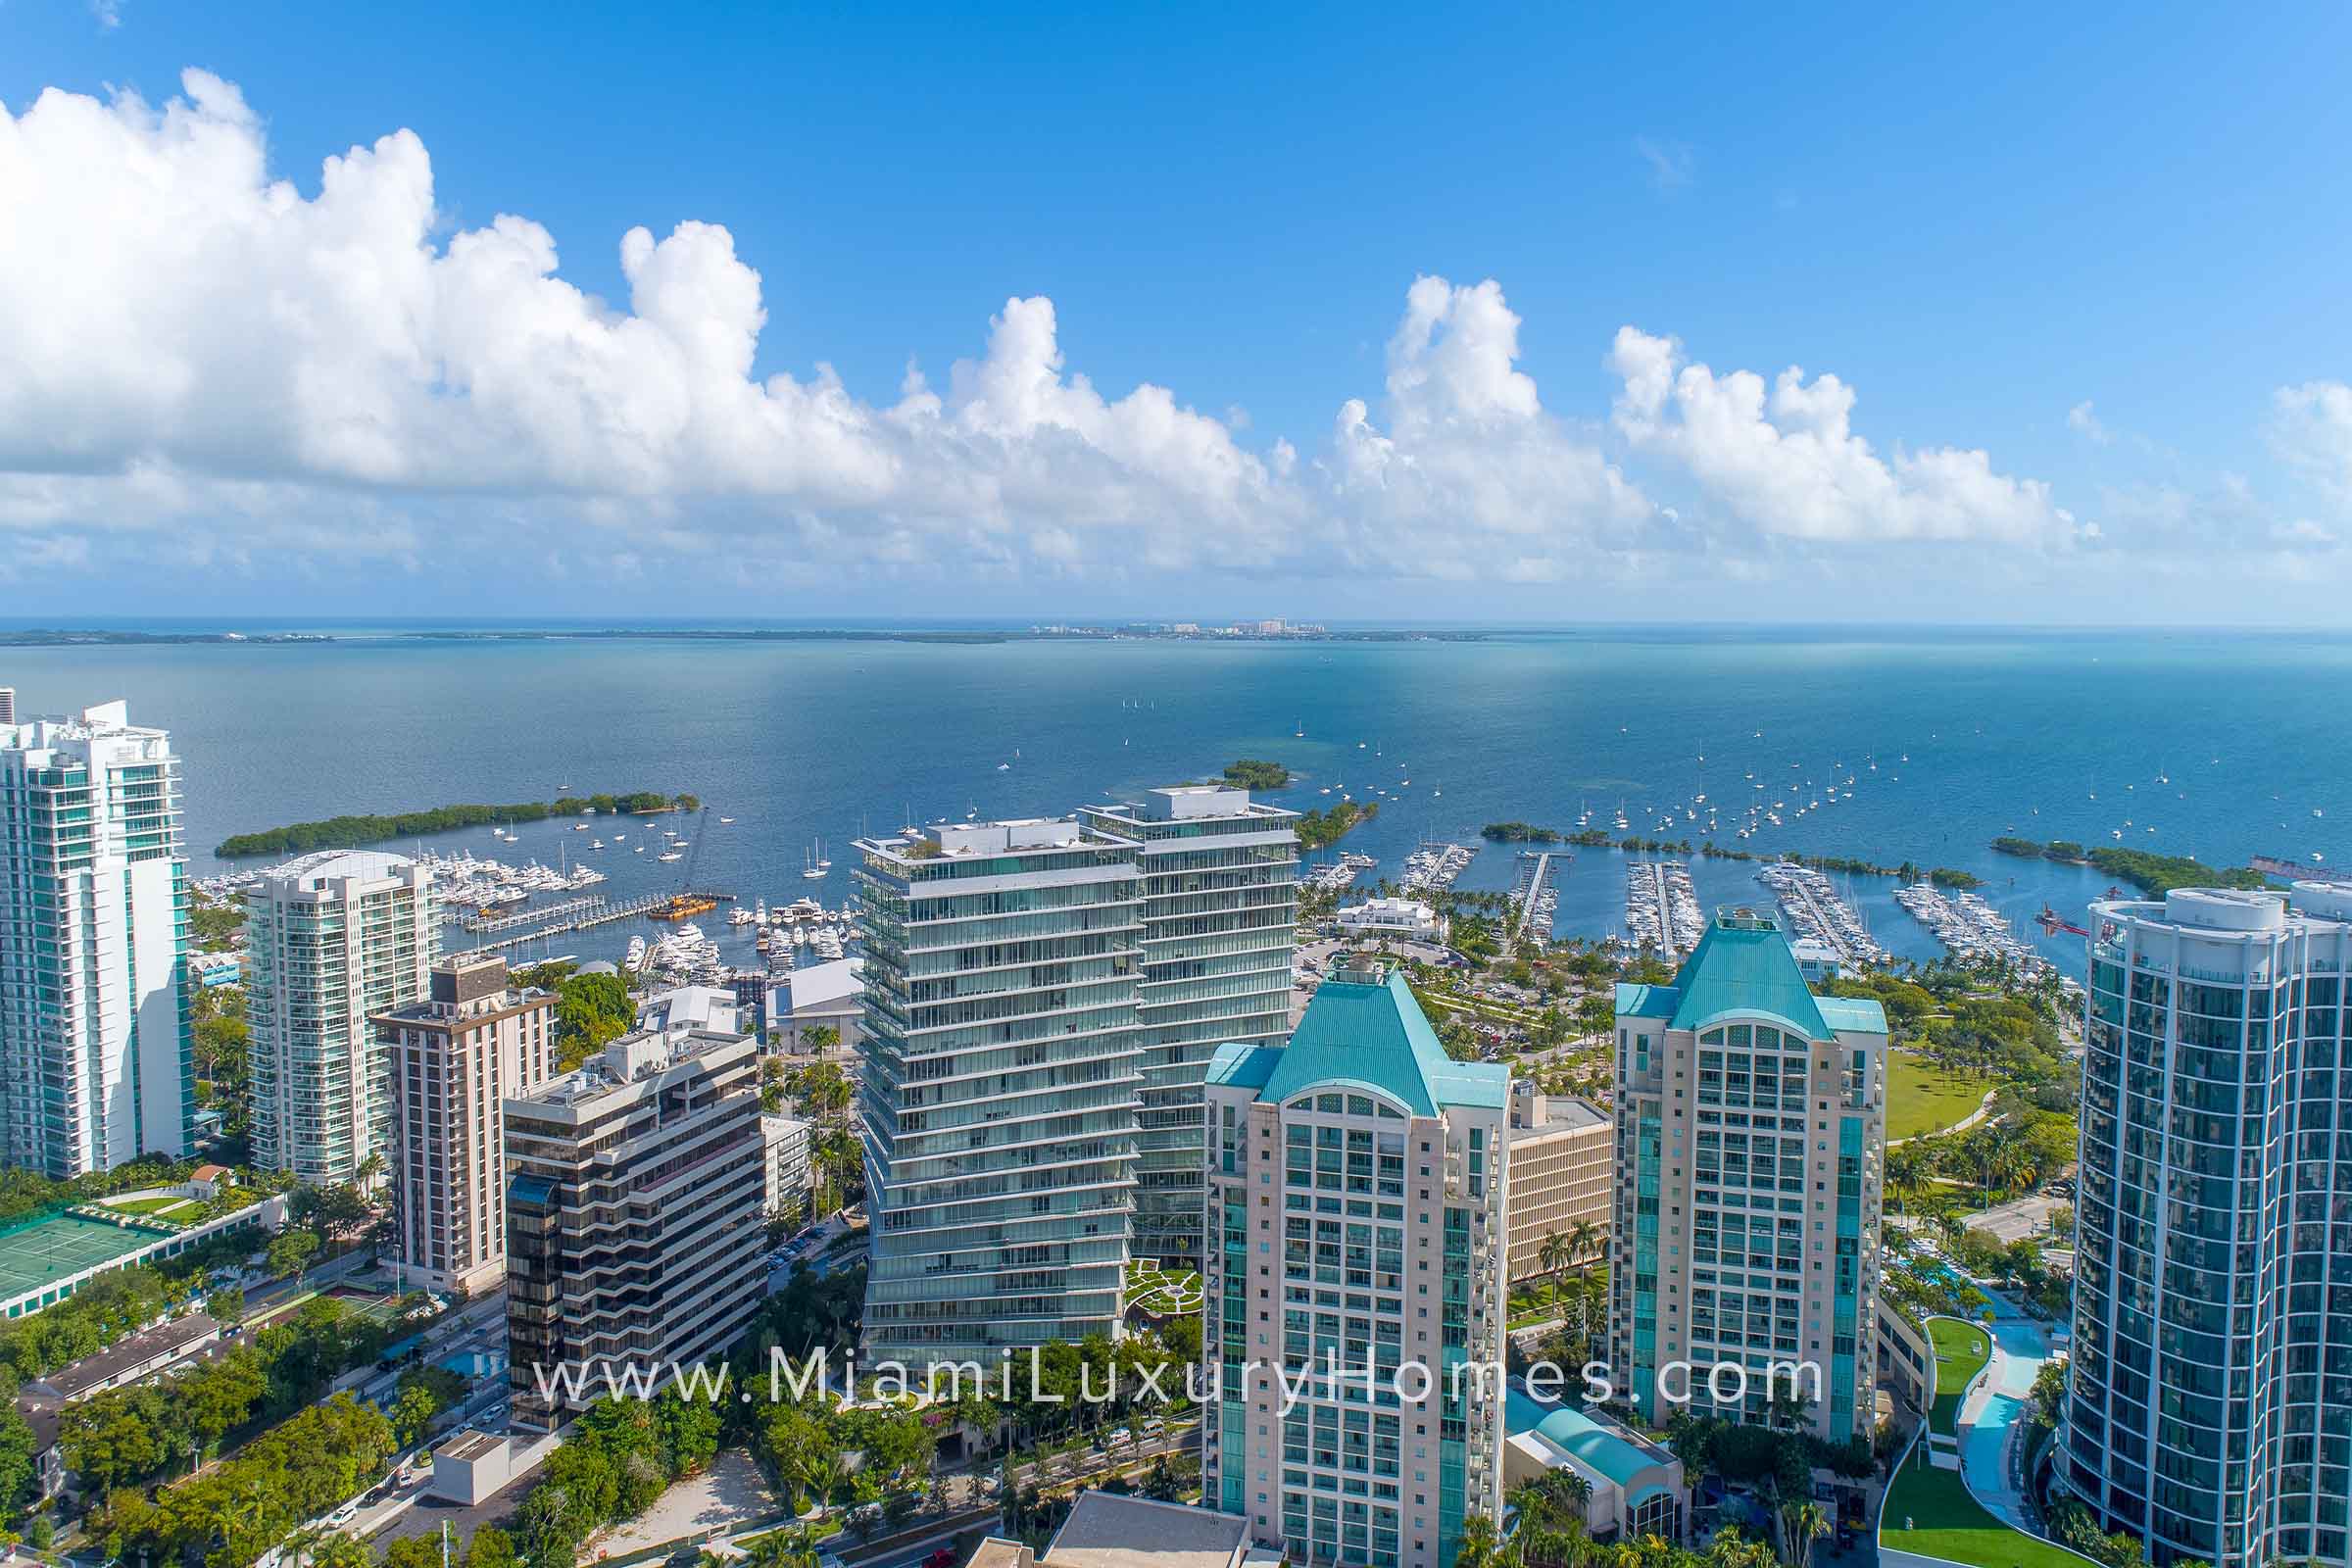 Aerial View of Ritz-Carlton Residences Coconut Grove